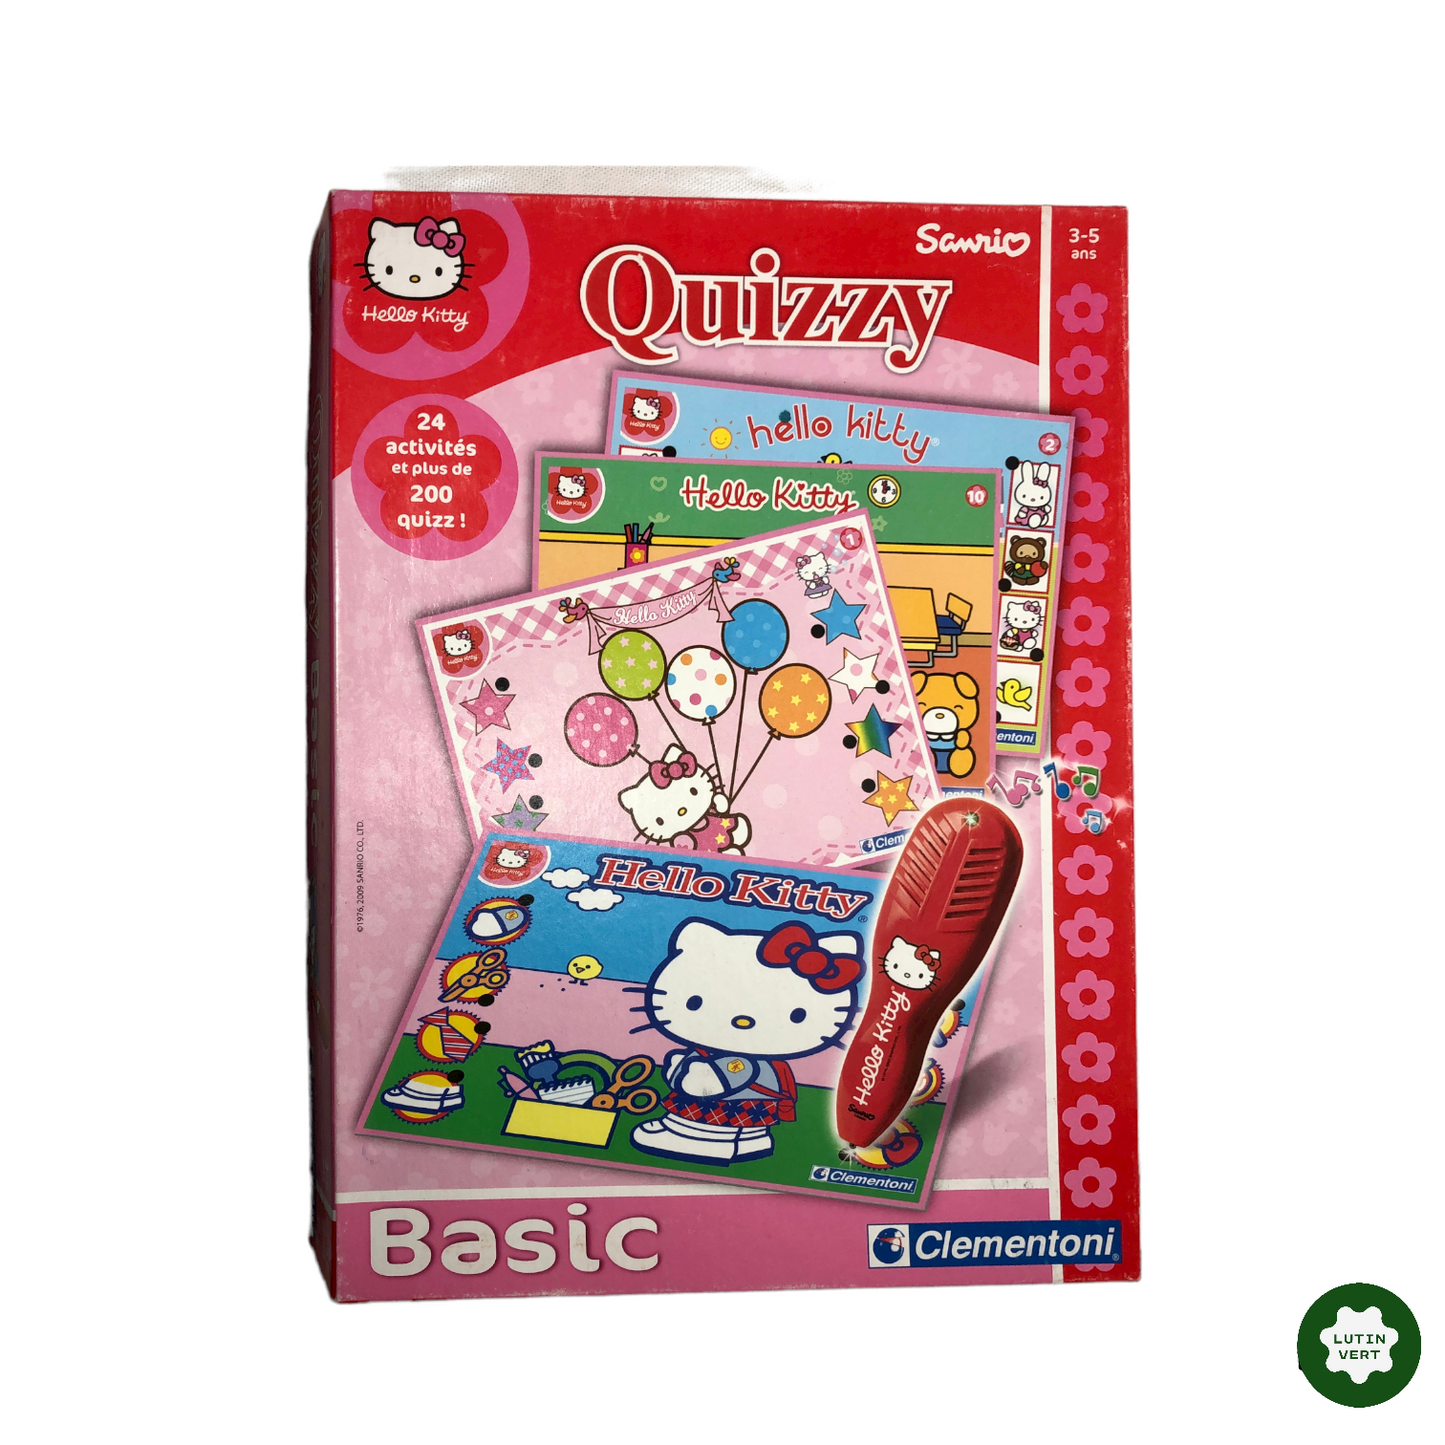 Quizzy Basic Hello Kitty occasion - Jeu éducatif interactif Clementoni